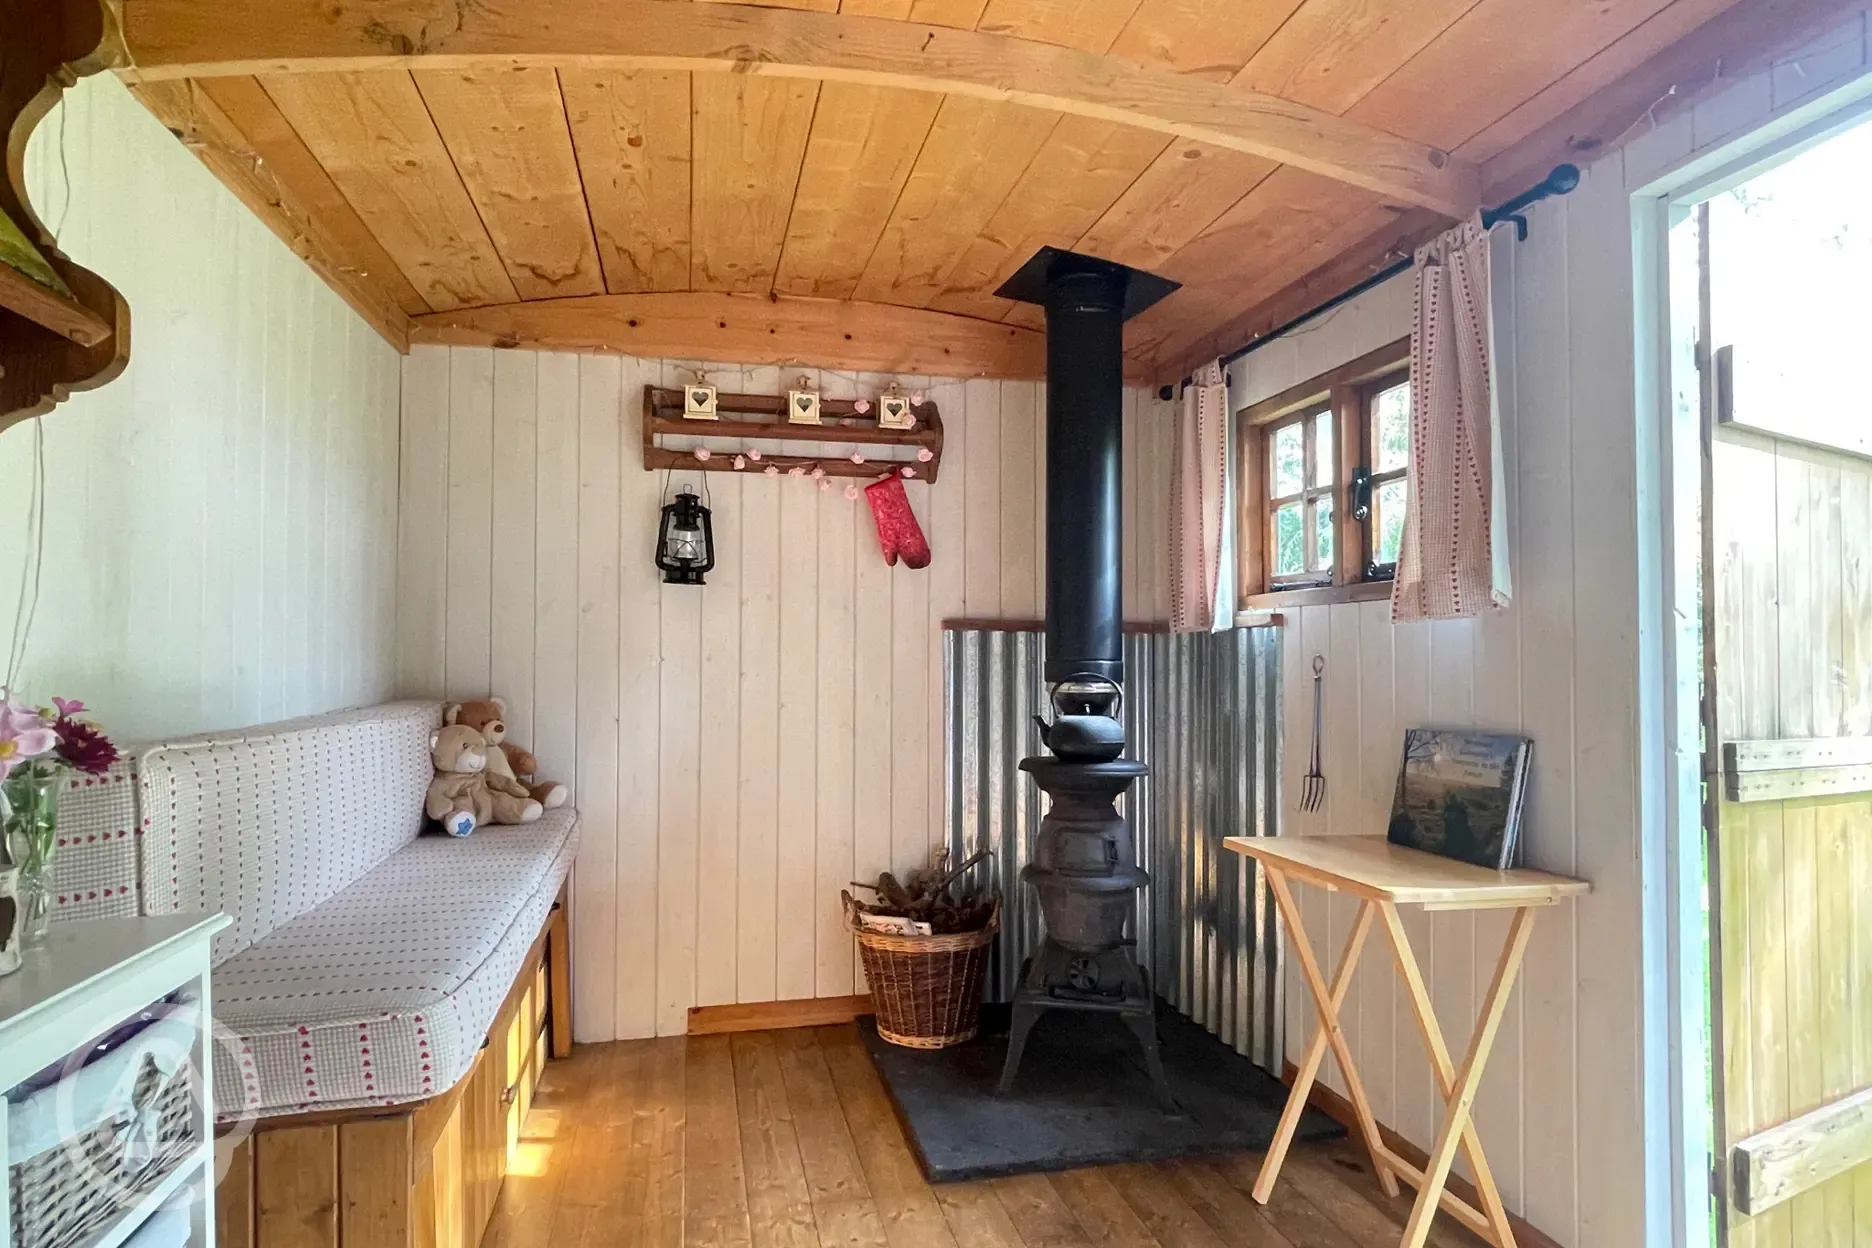 Shepherd hut interior with a wood burner